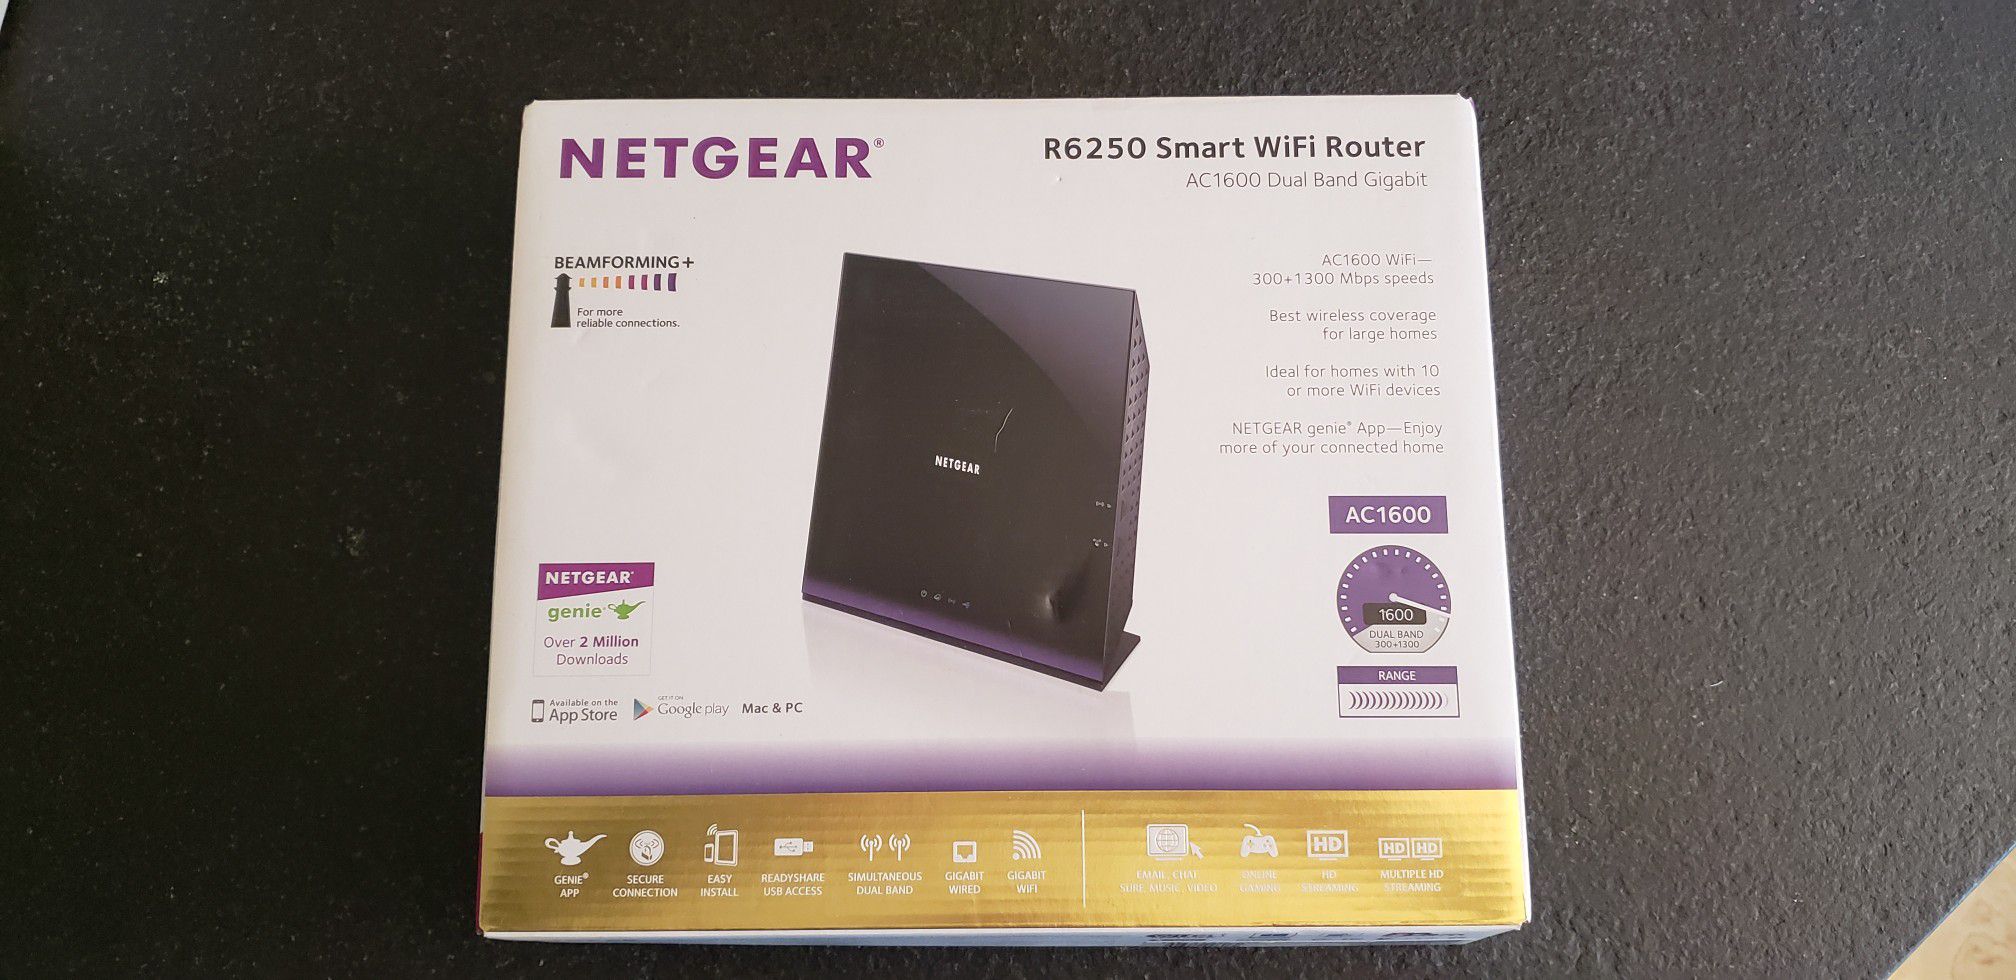 R6250 Smart WiFi Router - AC1600 Dual Band Gigabit